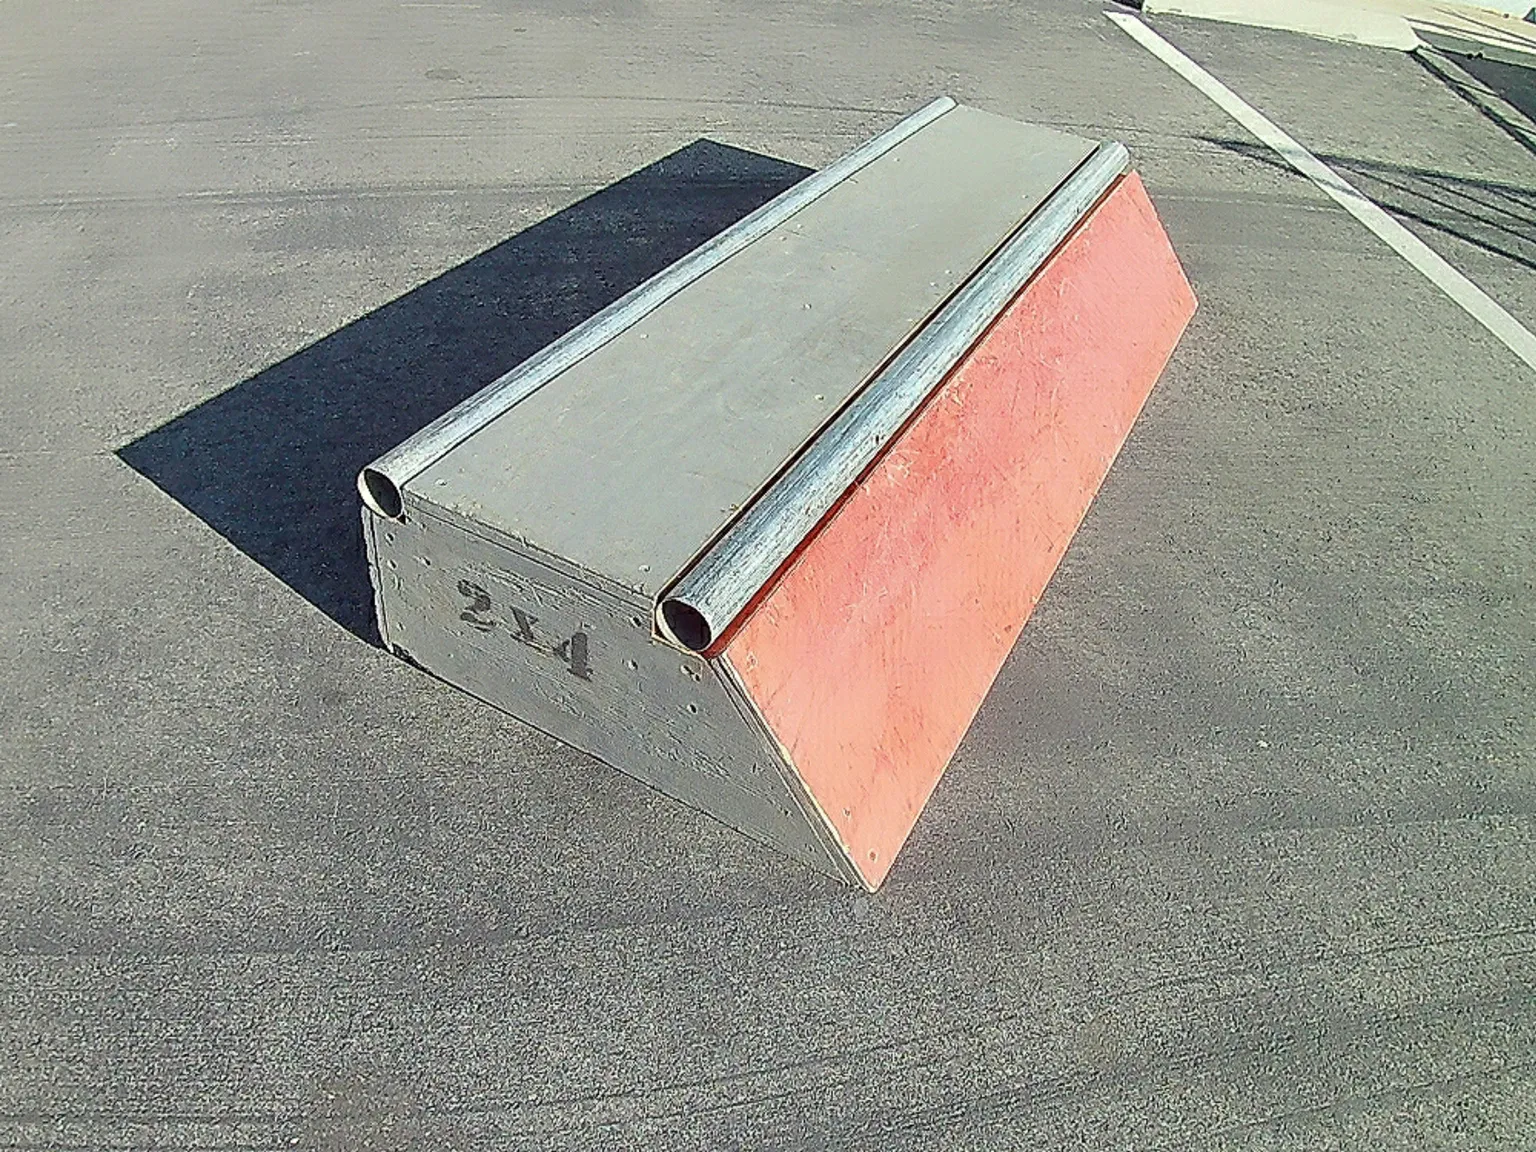 Slappy curb grind box on asphalt, front view